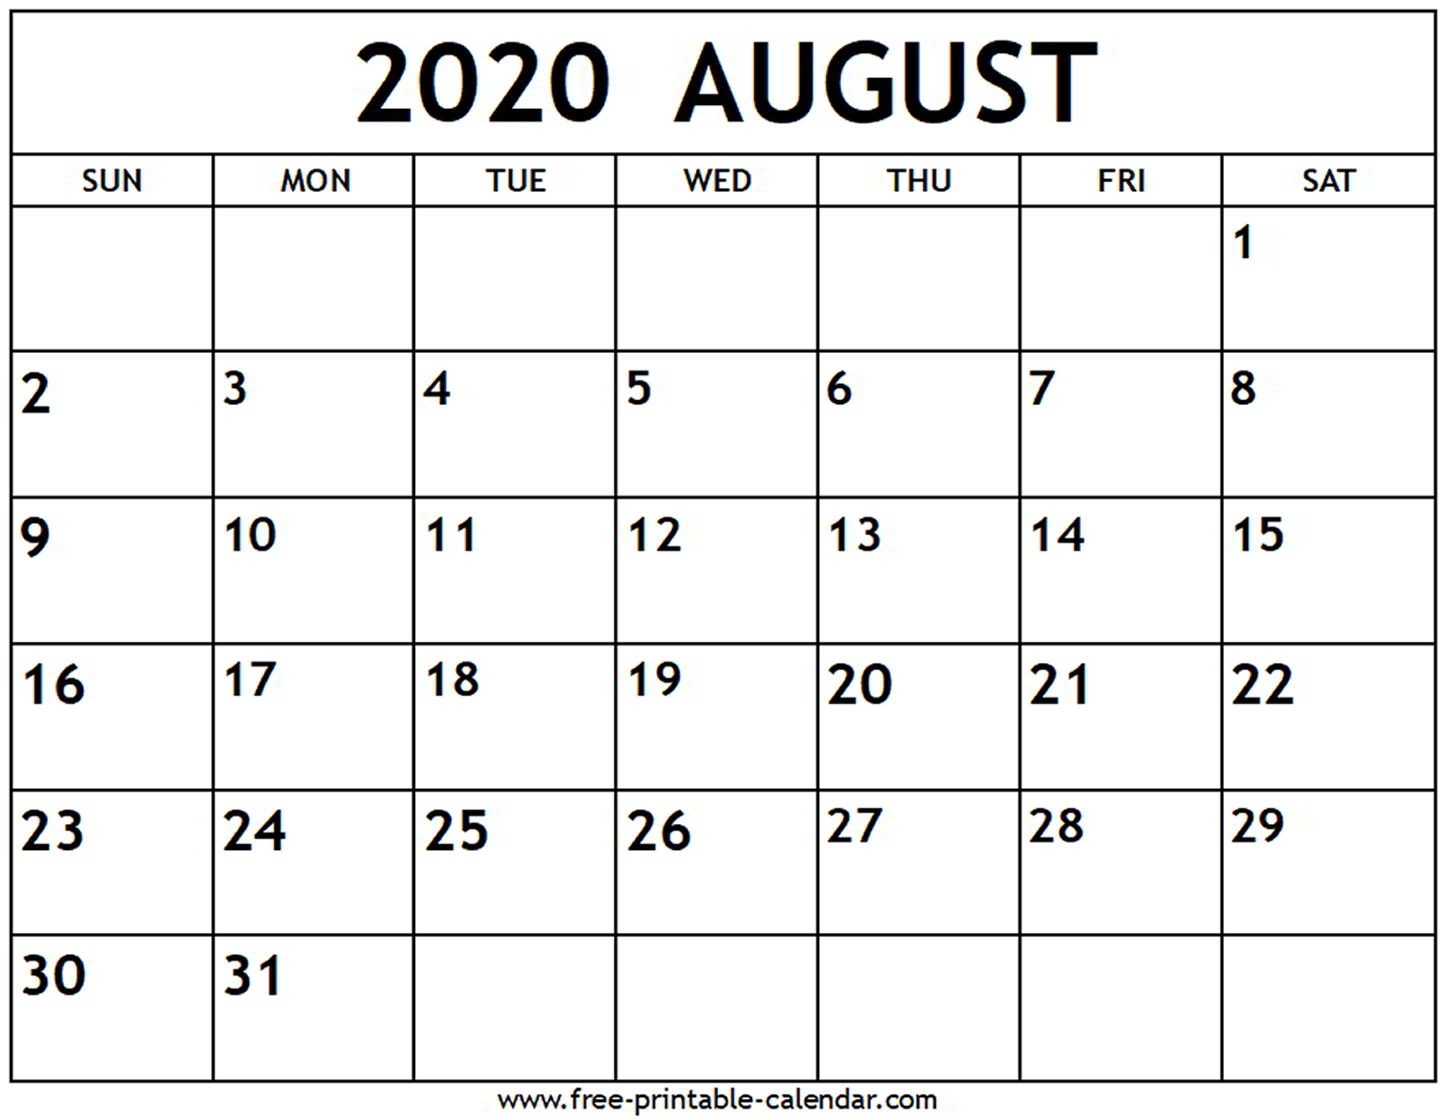 August 2020 Calendar - Free-Printable-Calendar-Calendar Template June 2020 To August 2020